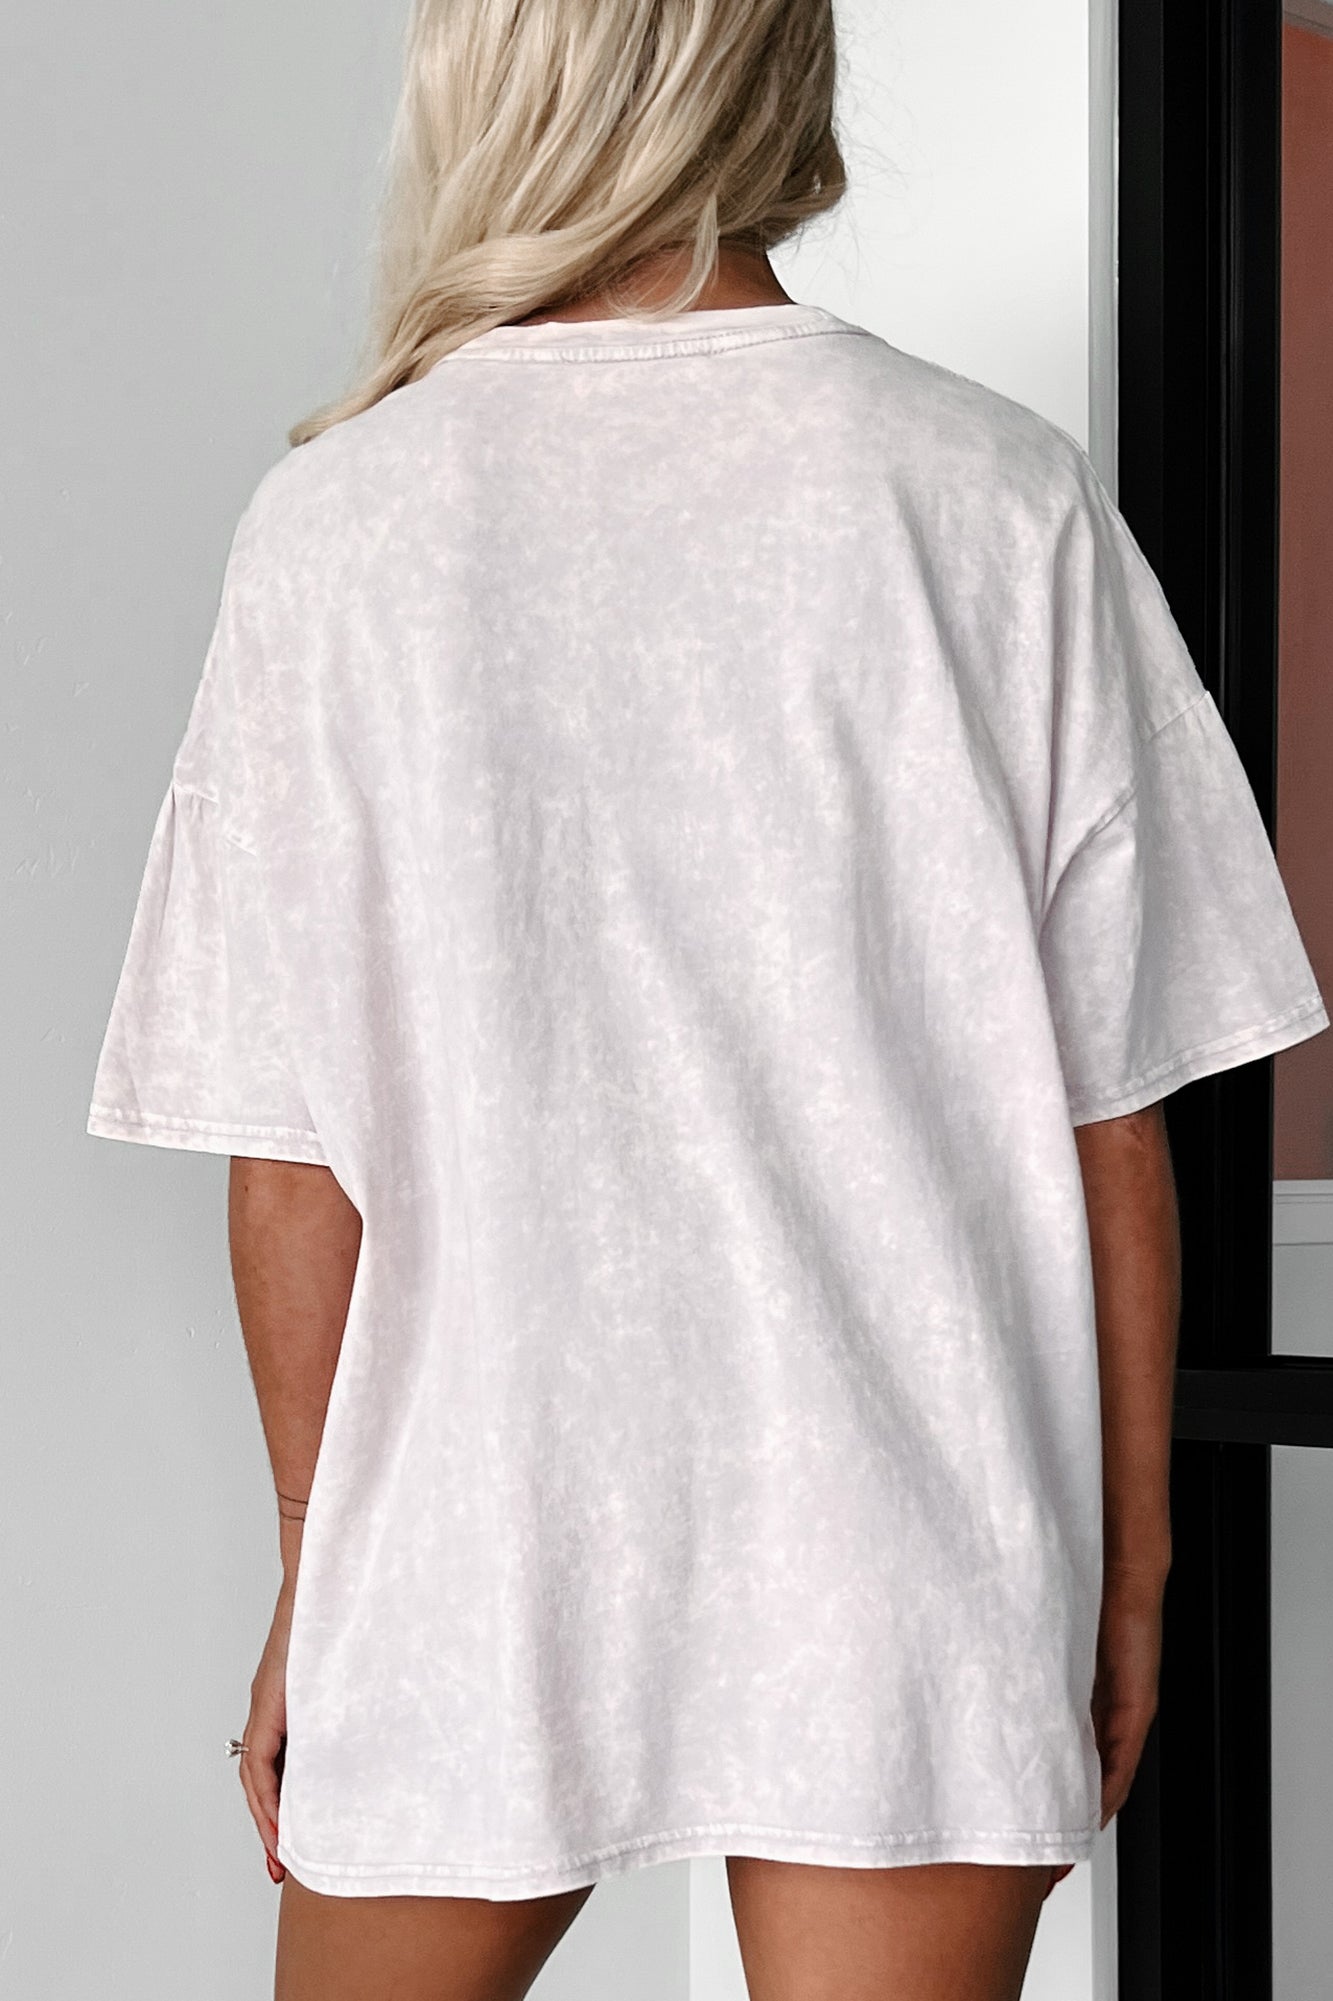 "Check On Your Single Friends" Oversized Acid Wash Graphic T-Shirt (Pastel Violet) - Print On Demand - NanaMacs